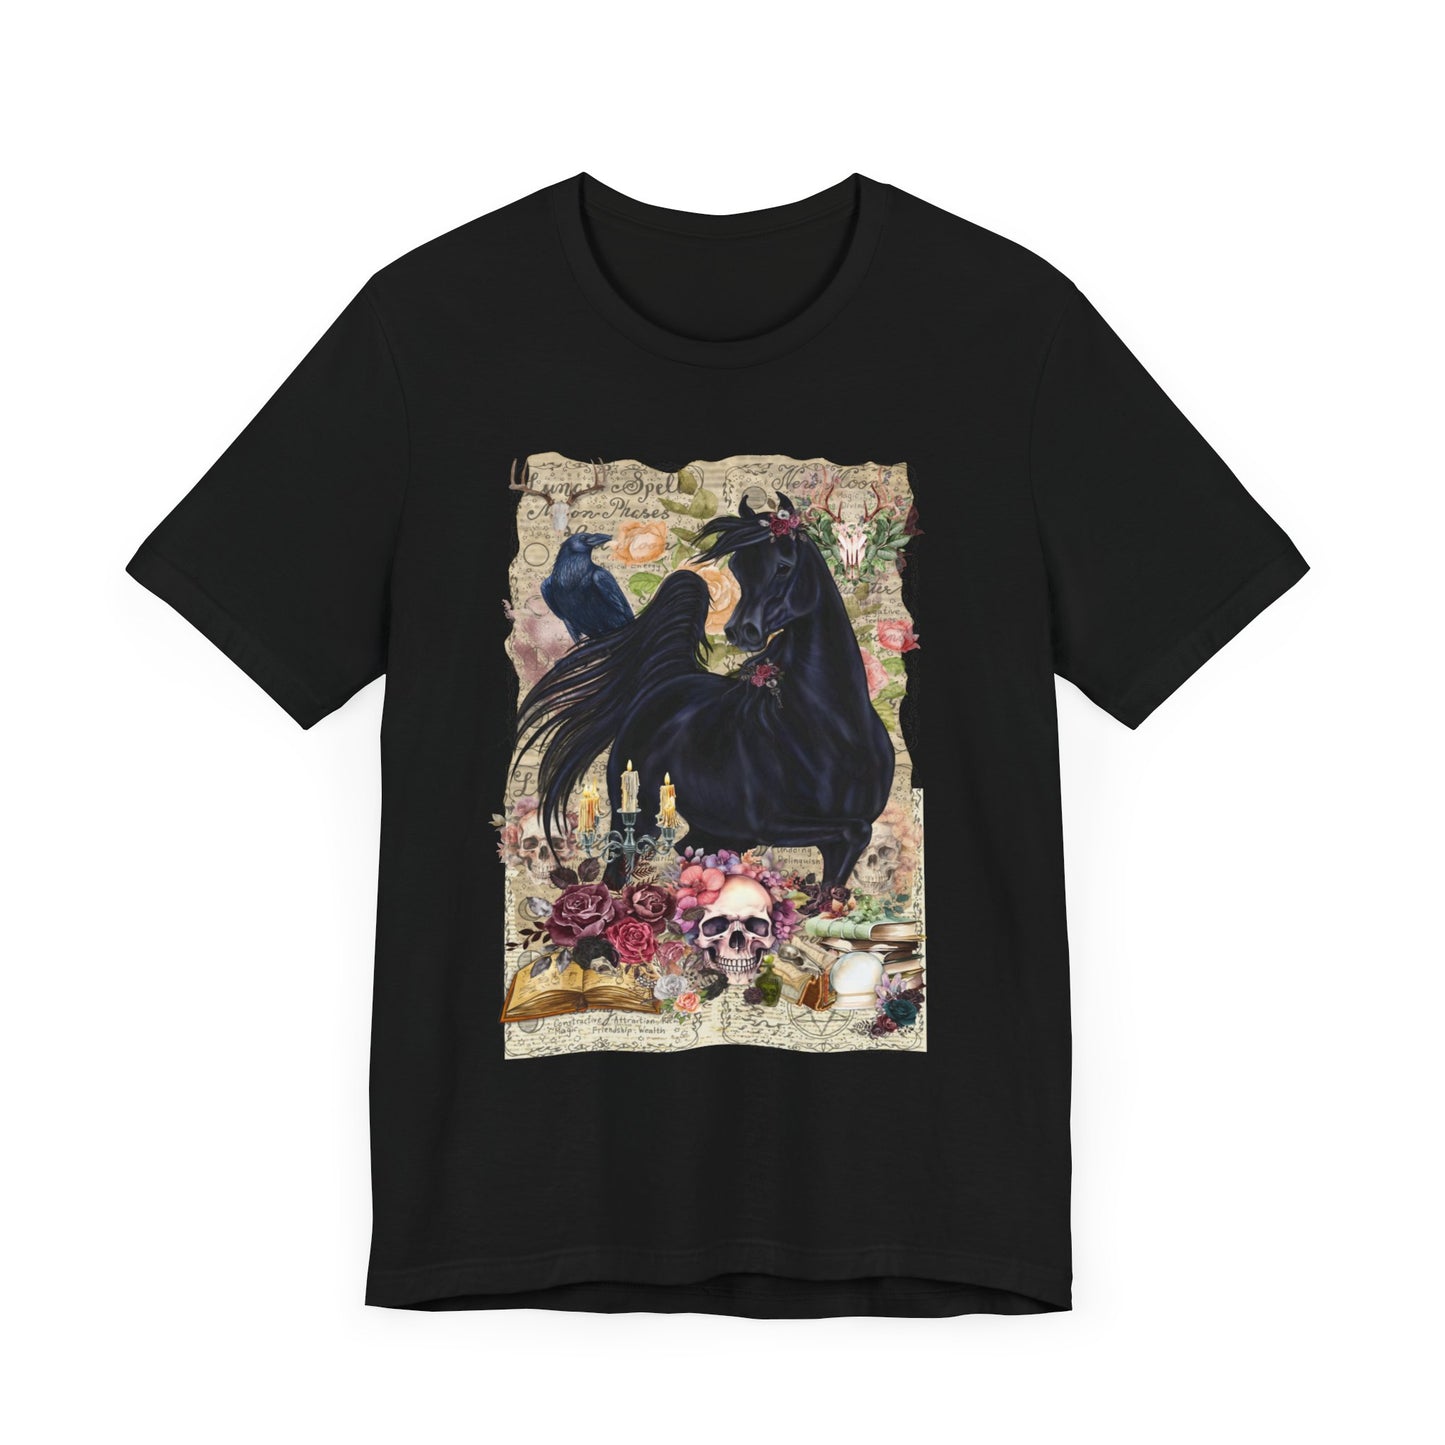 Super soft Arabian Horse Gothic Victorian Witchy skull art Short Sleeve Tee T-shirt horse shirt fantasy